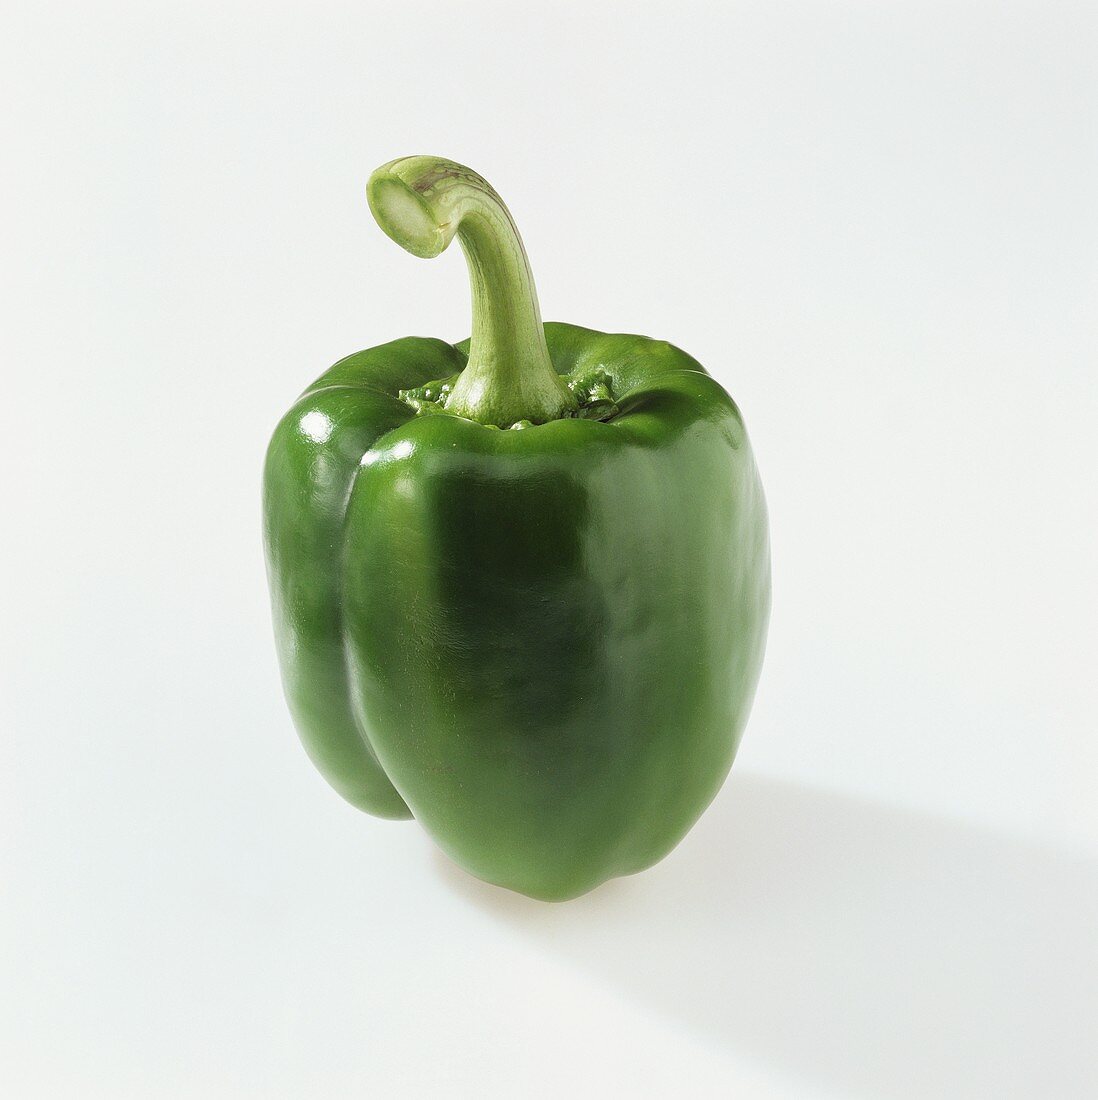 Eine grüne Paprika